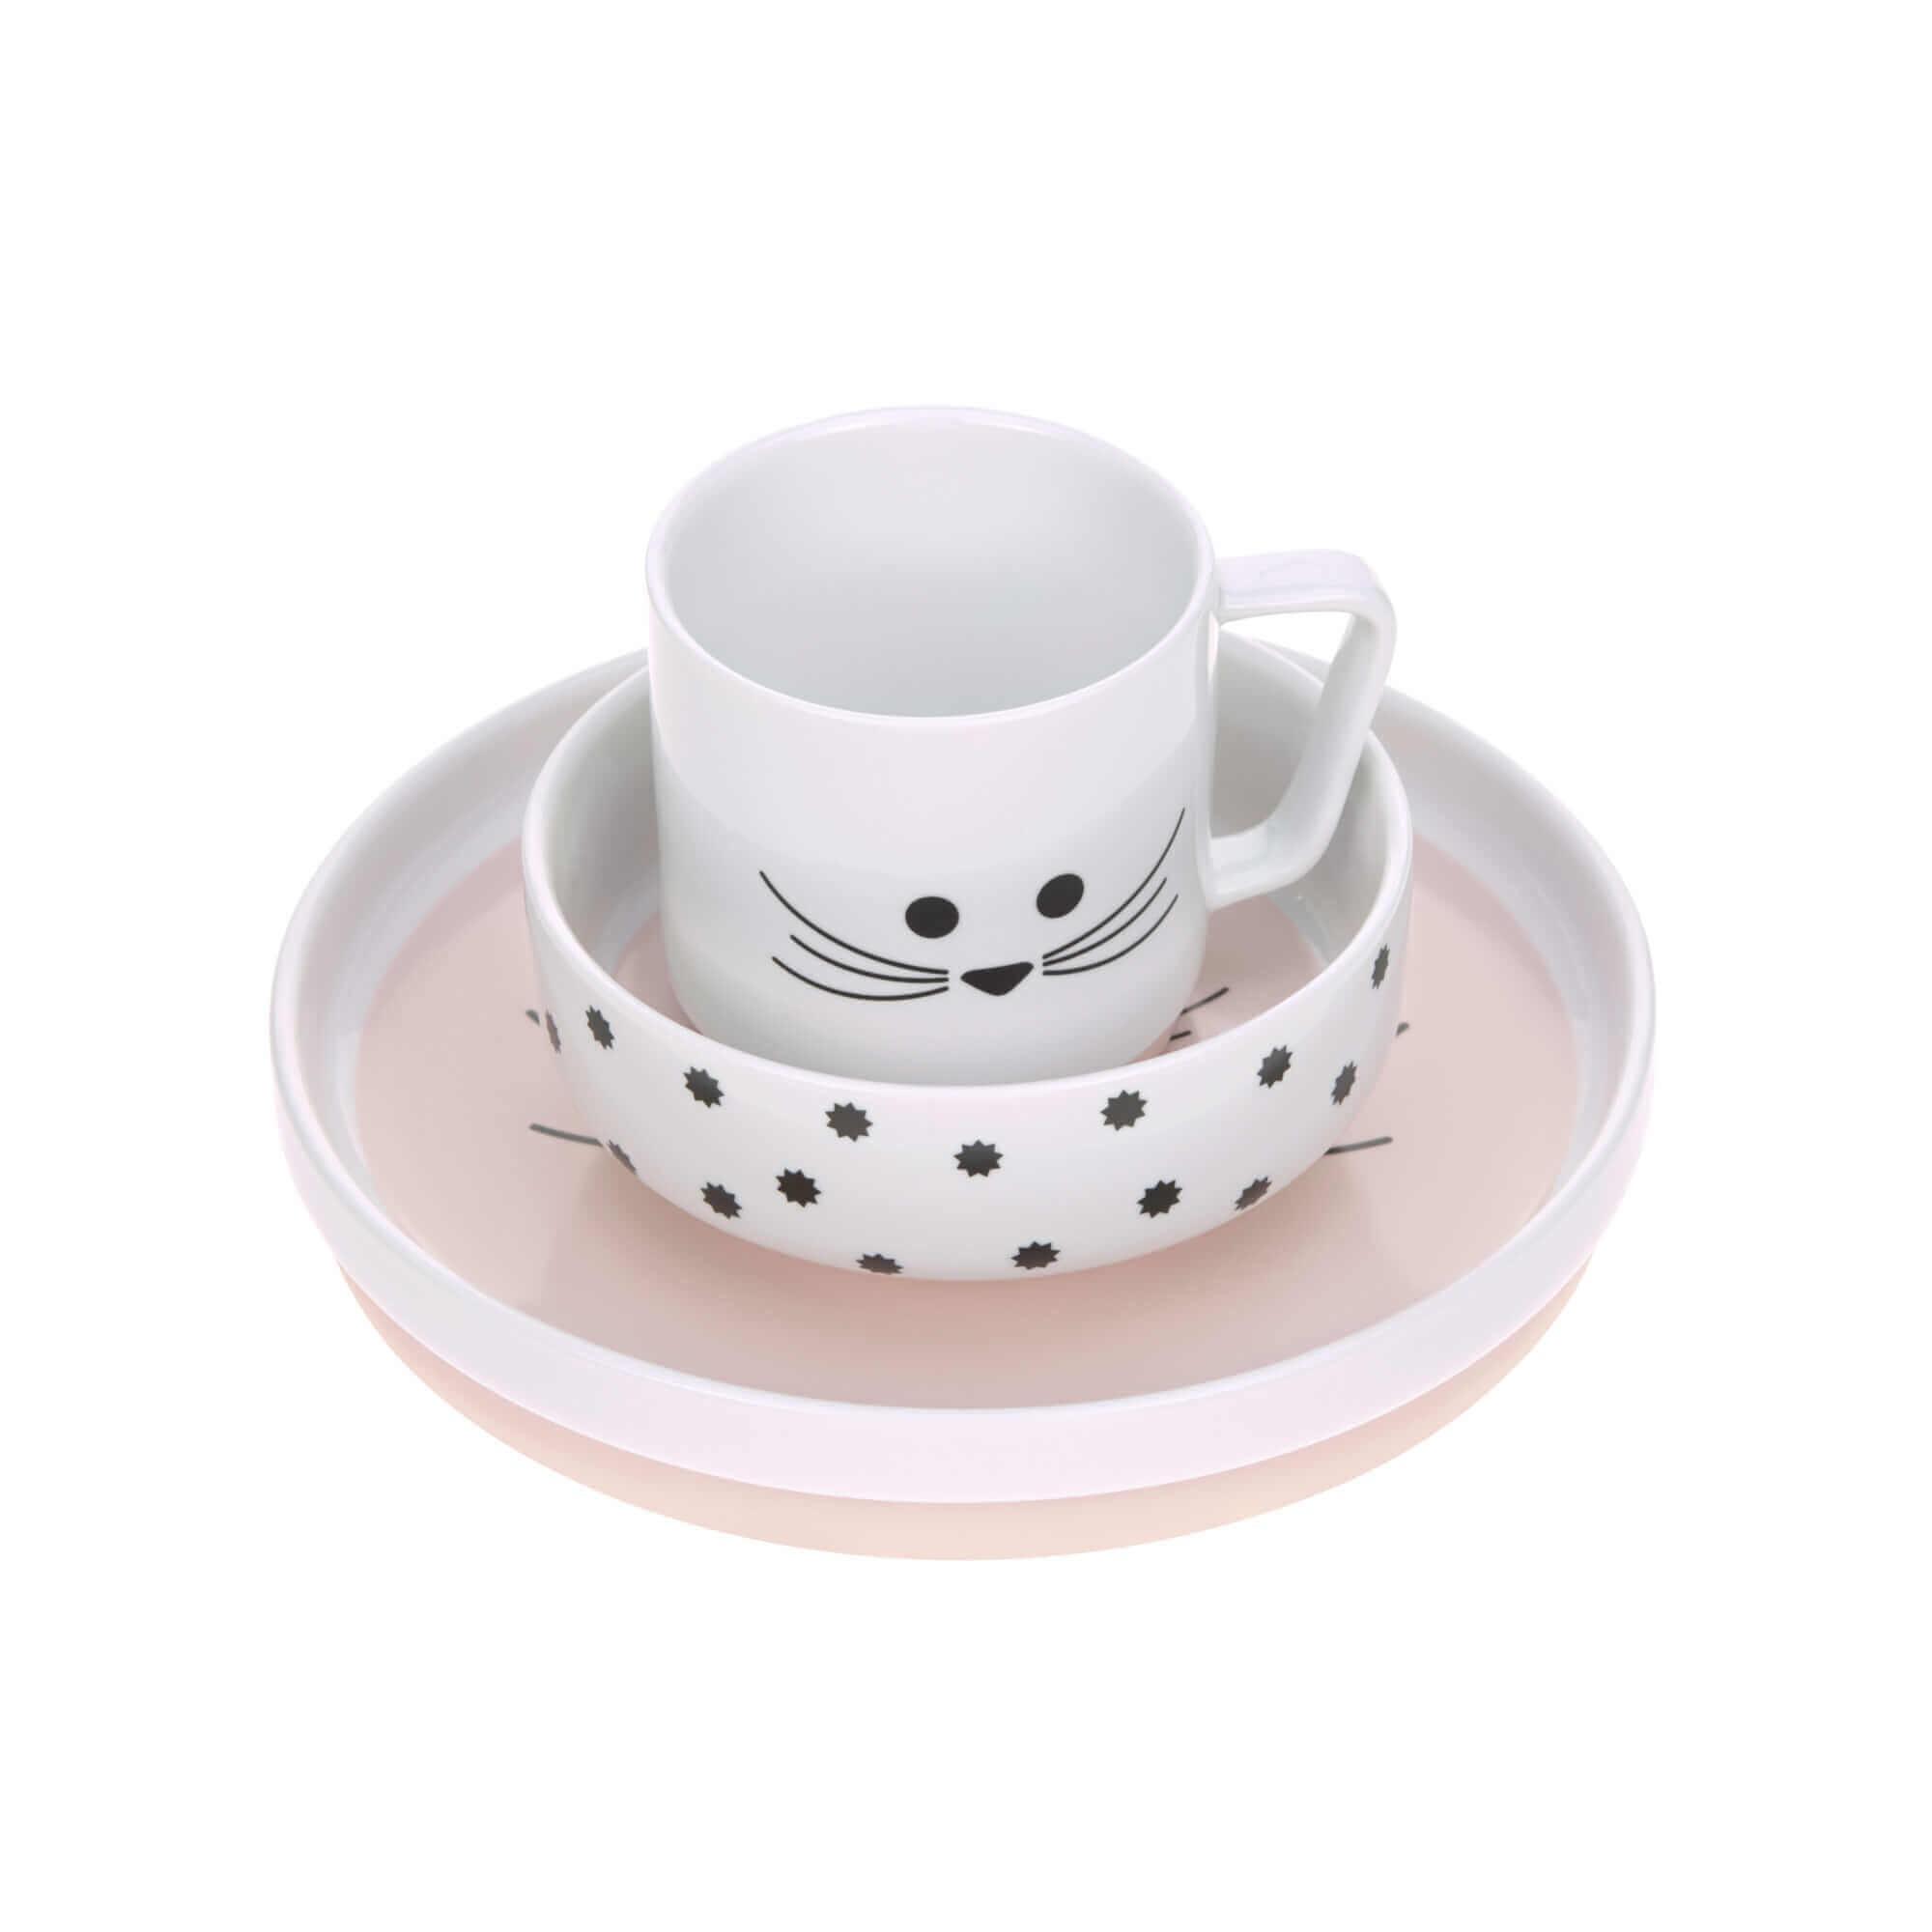 Lassig - Eetset porcelain/silicone little chums mouse